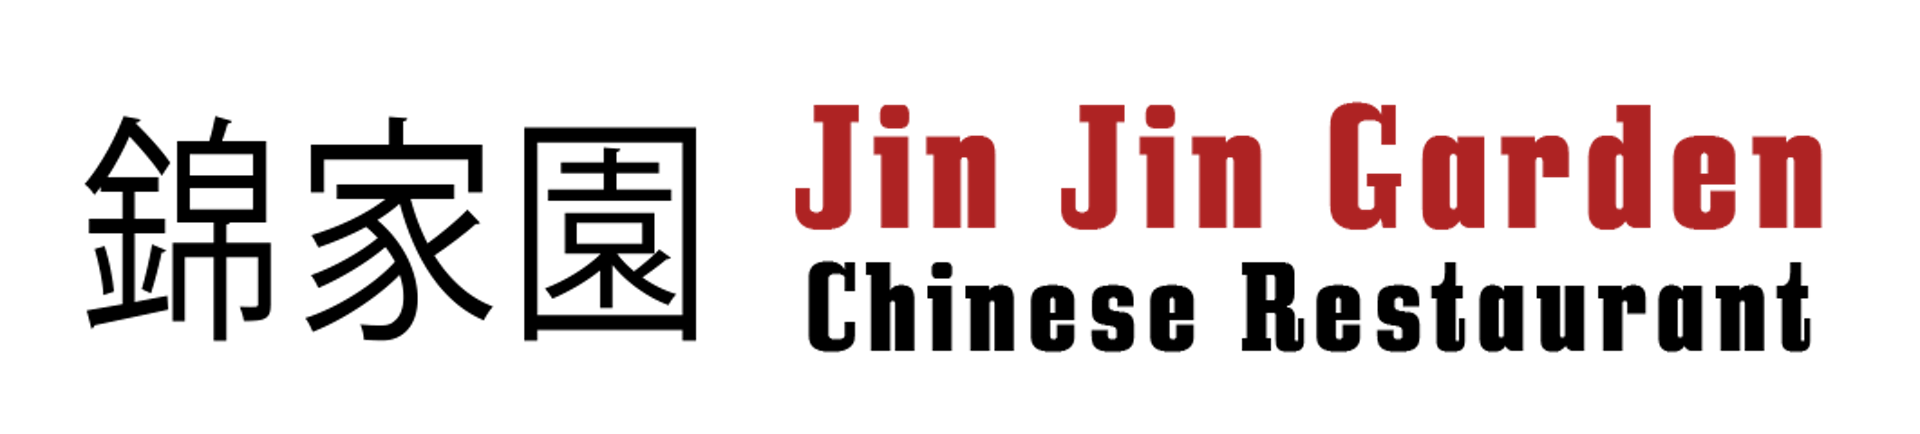 Jin Jin Garden Chinese Restaurant Junction City Ks 66441 Menu